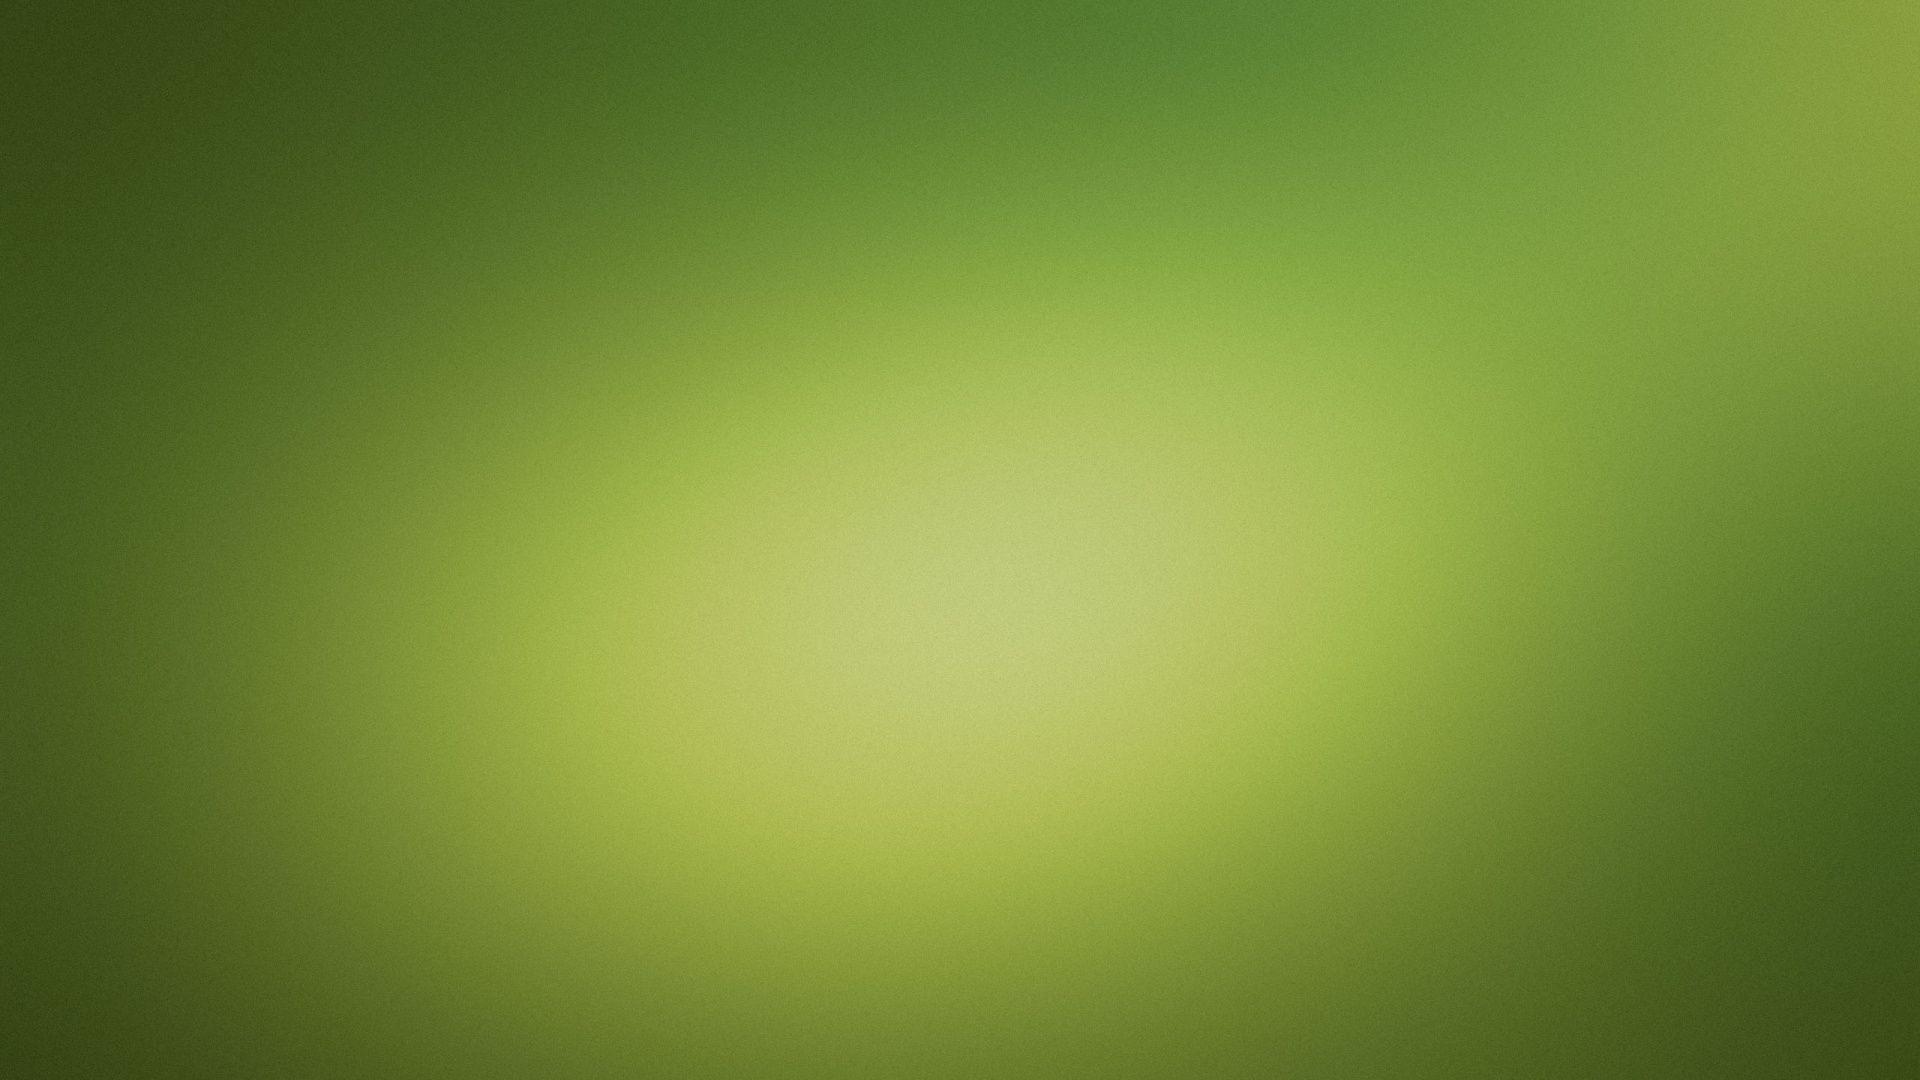 Light Green Backgrounds 31853 1920x1080 px